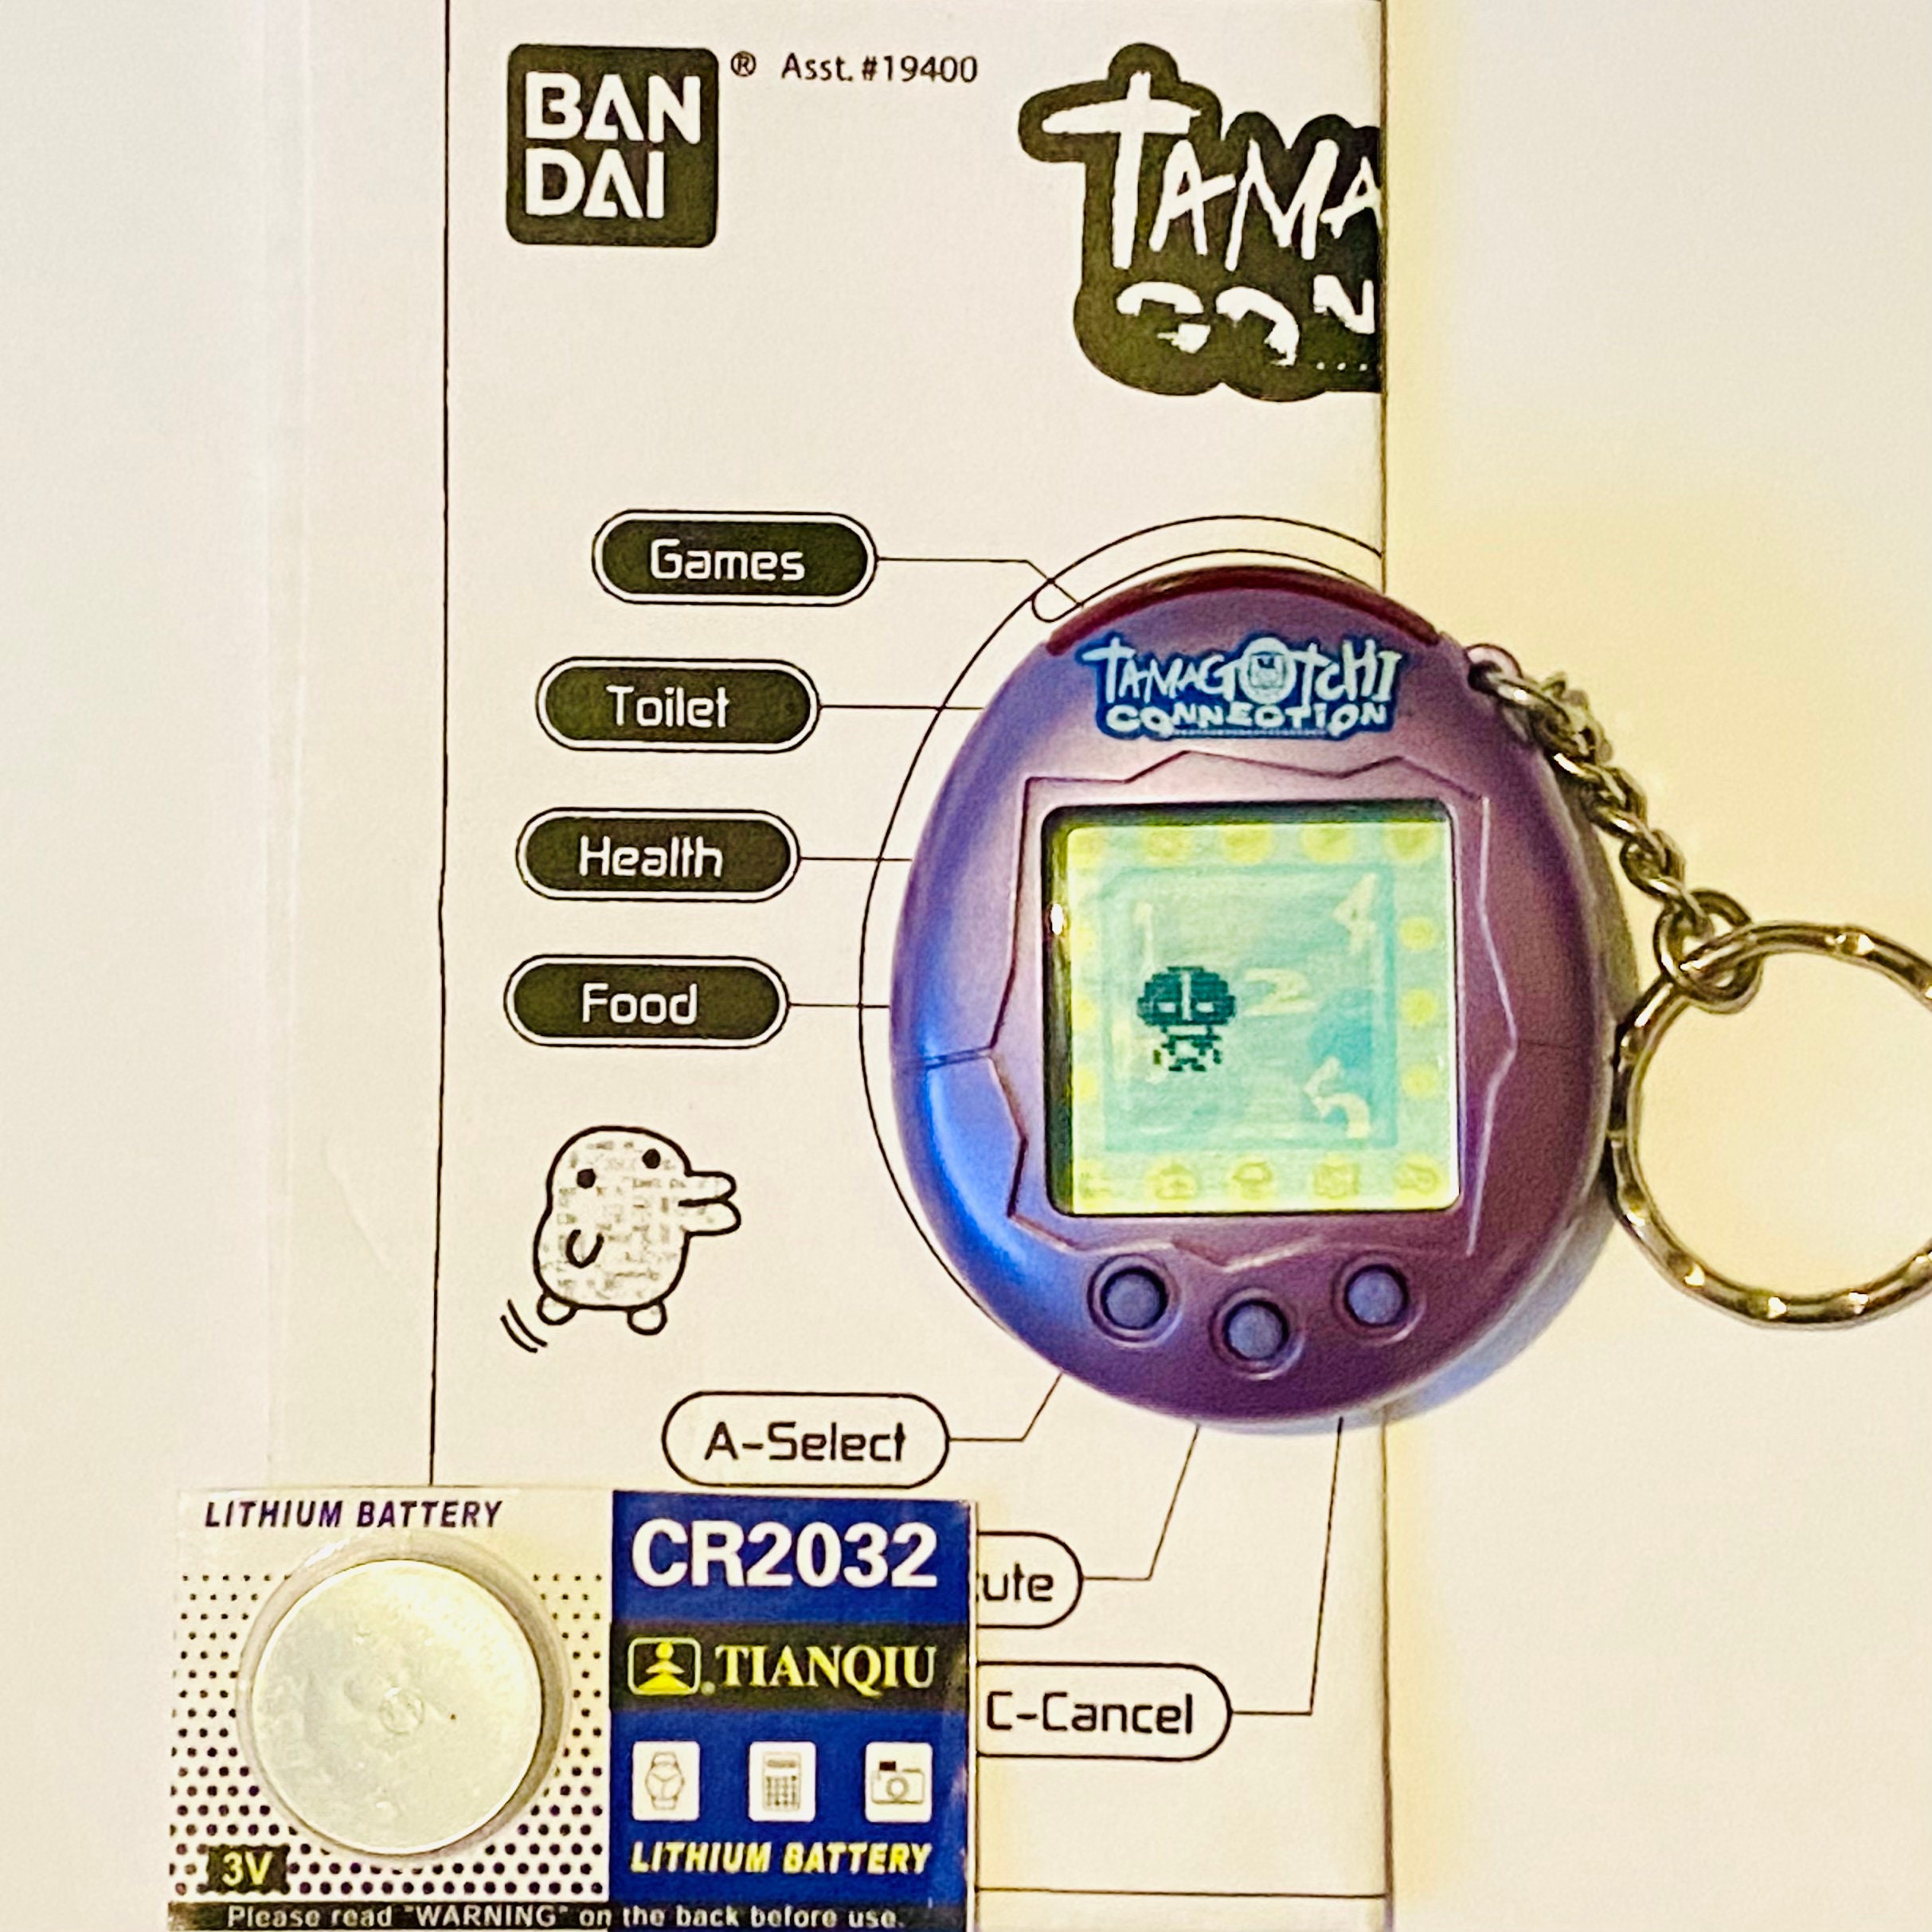 Bandai TAMAGOTCHI Connection version 1 - LCD game - Without original box -  Catawiki